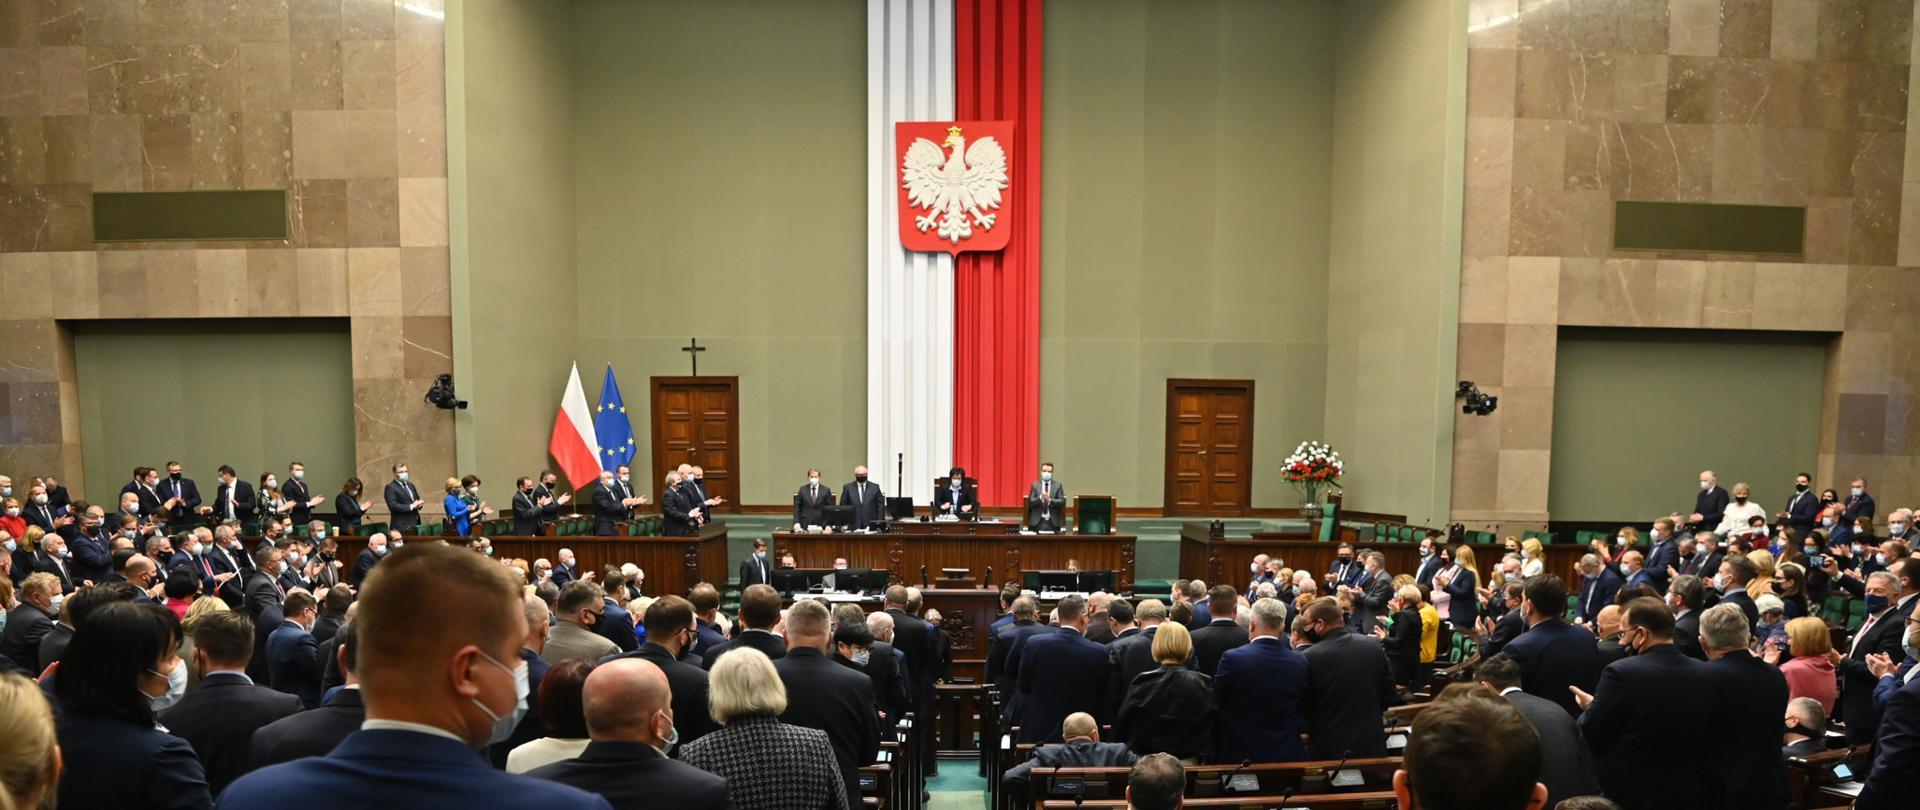 Fot. Aleksander Zieliński/Kancelaria Sejmu